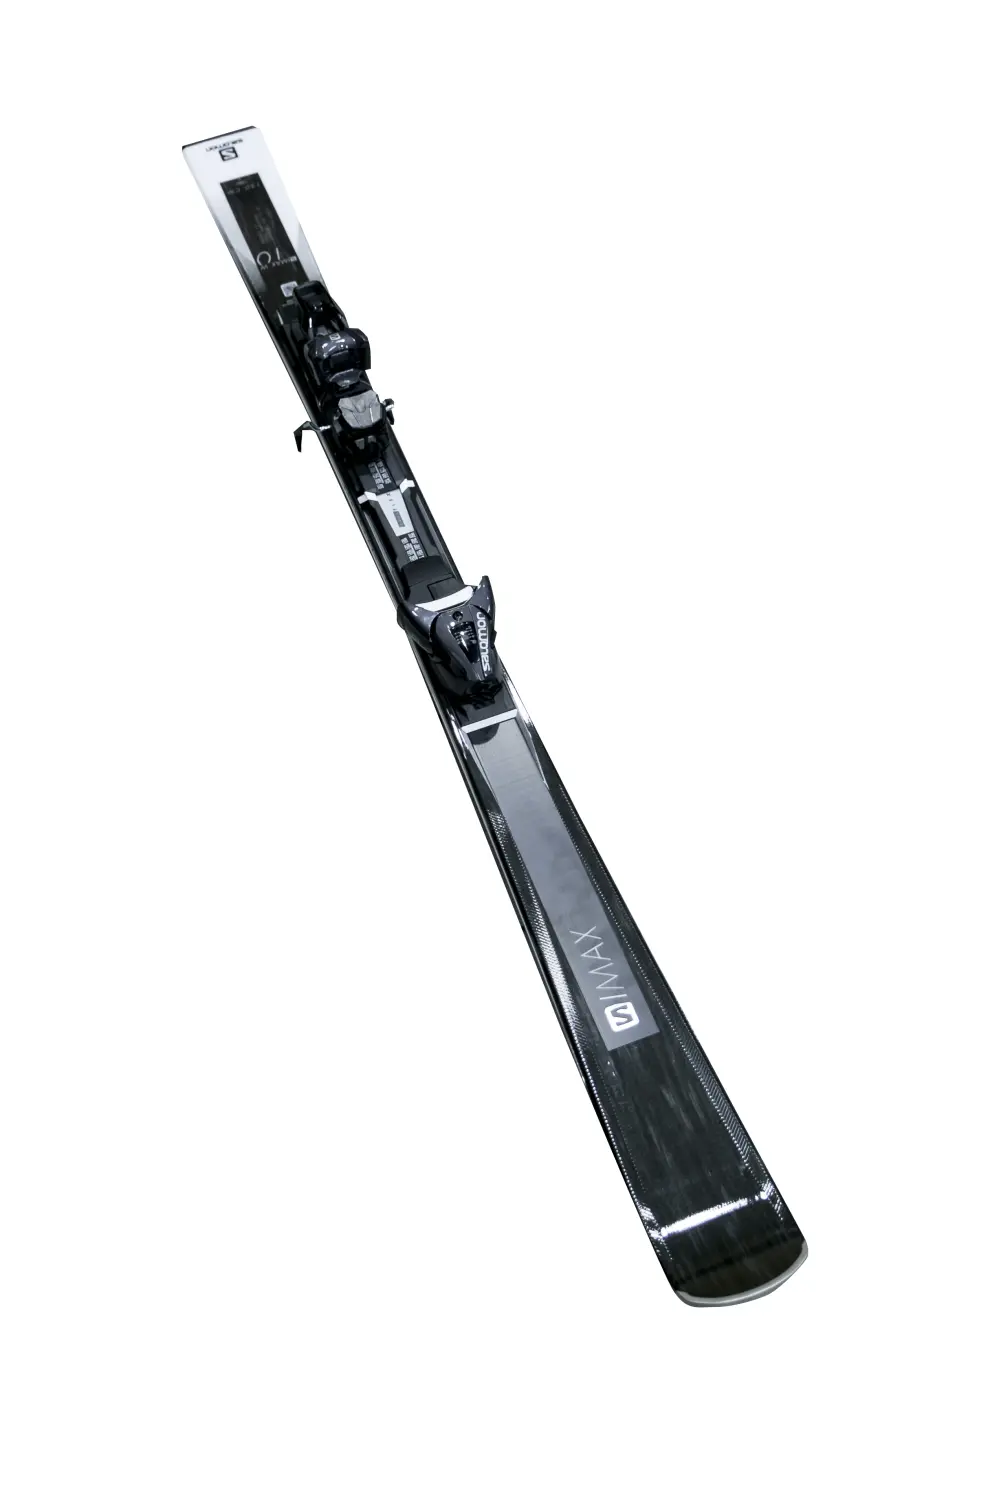 Modelo XMax Salomón para mujer, de un nivel de esquí medio-alto, facil de manejar. Fijación también de Salomón (599,99 euros, en Intersport Sueiro).